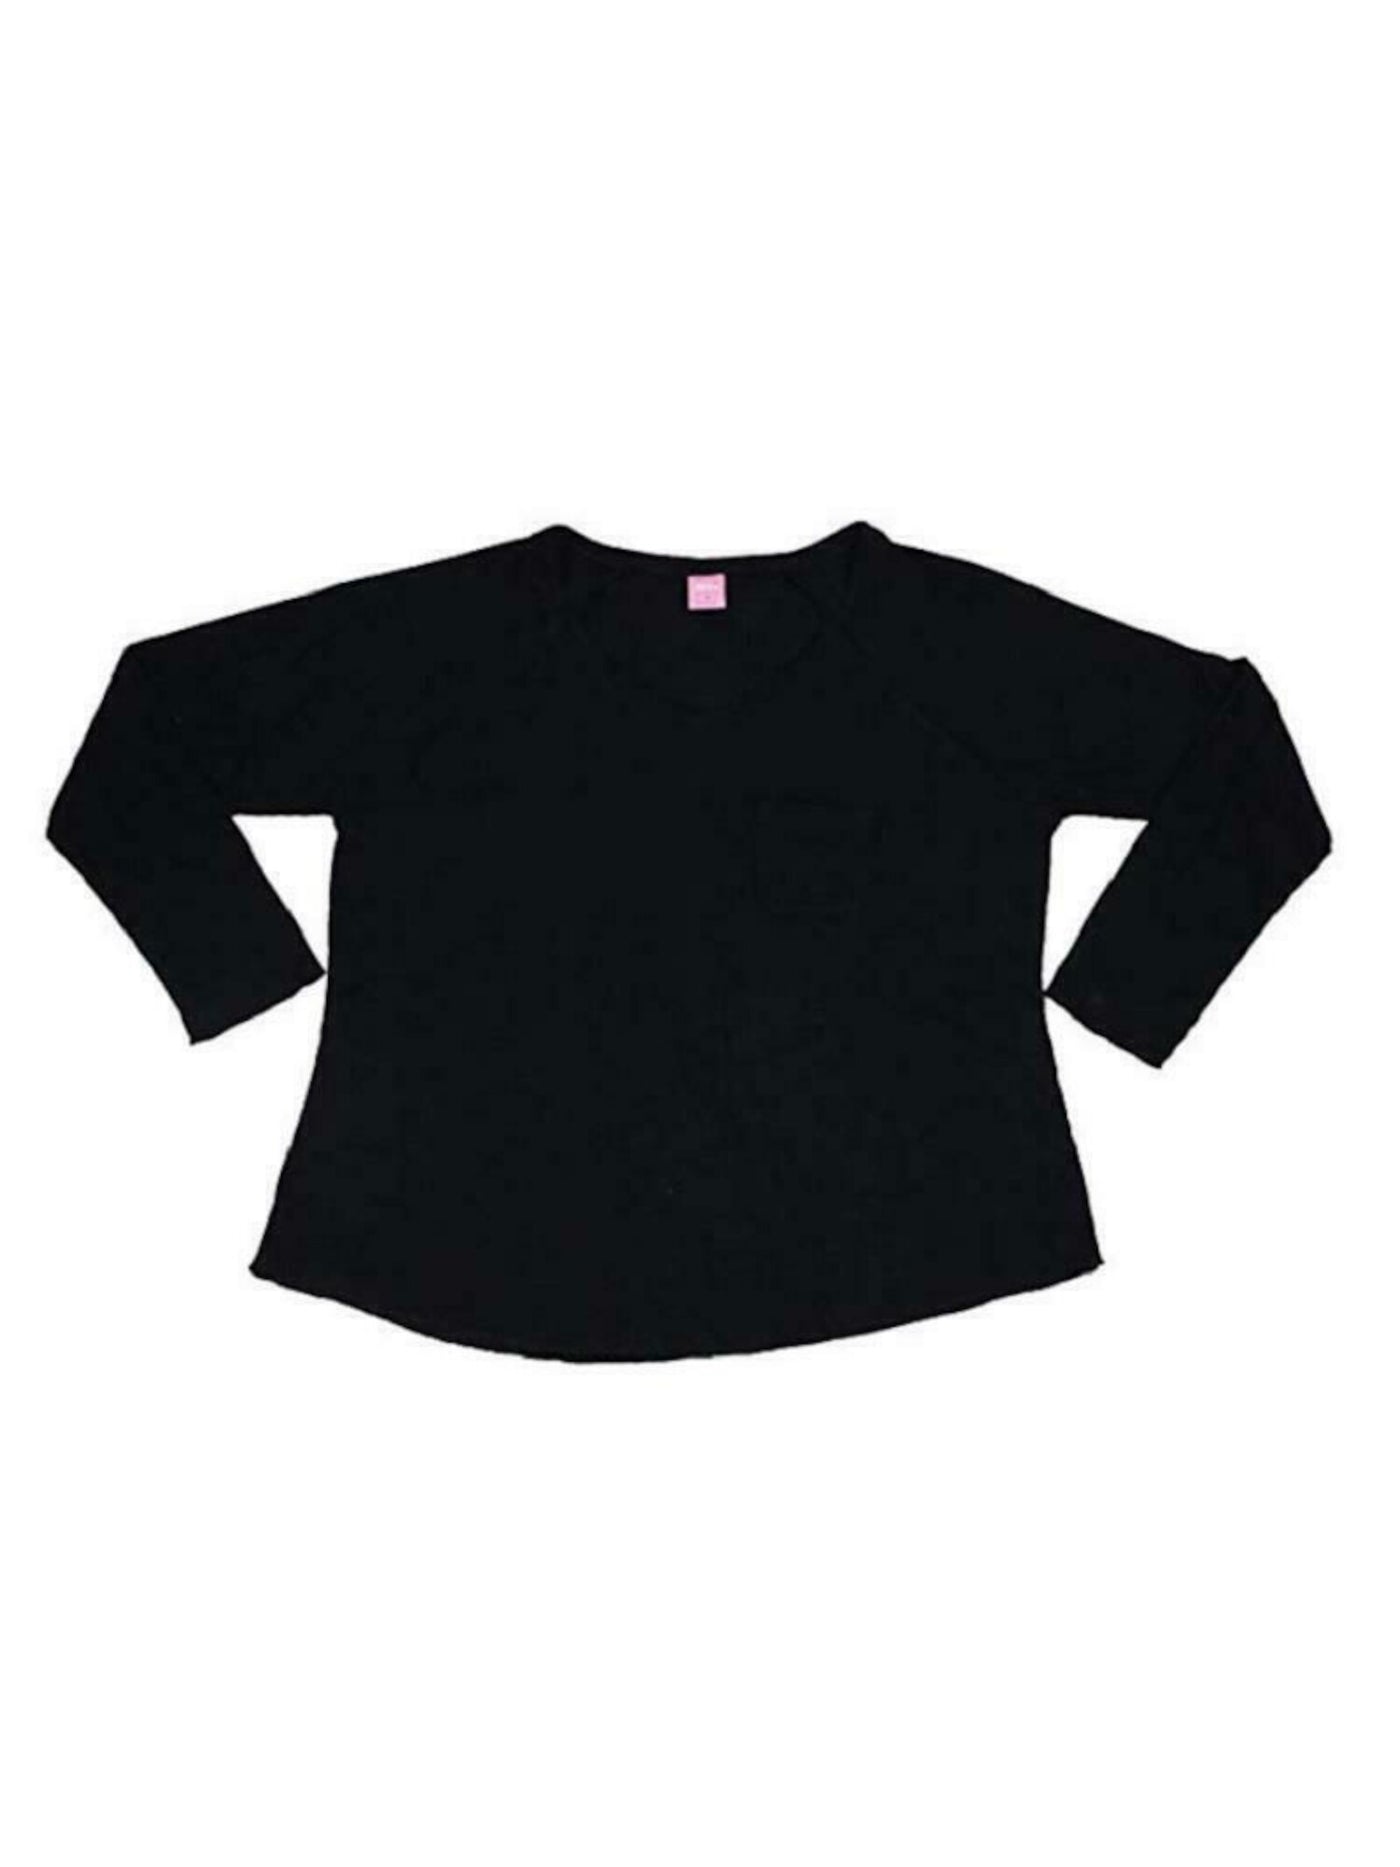 JENNI Intimates Black Solid Sleepwear Shirt Size: M